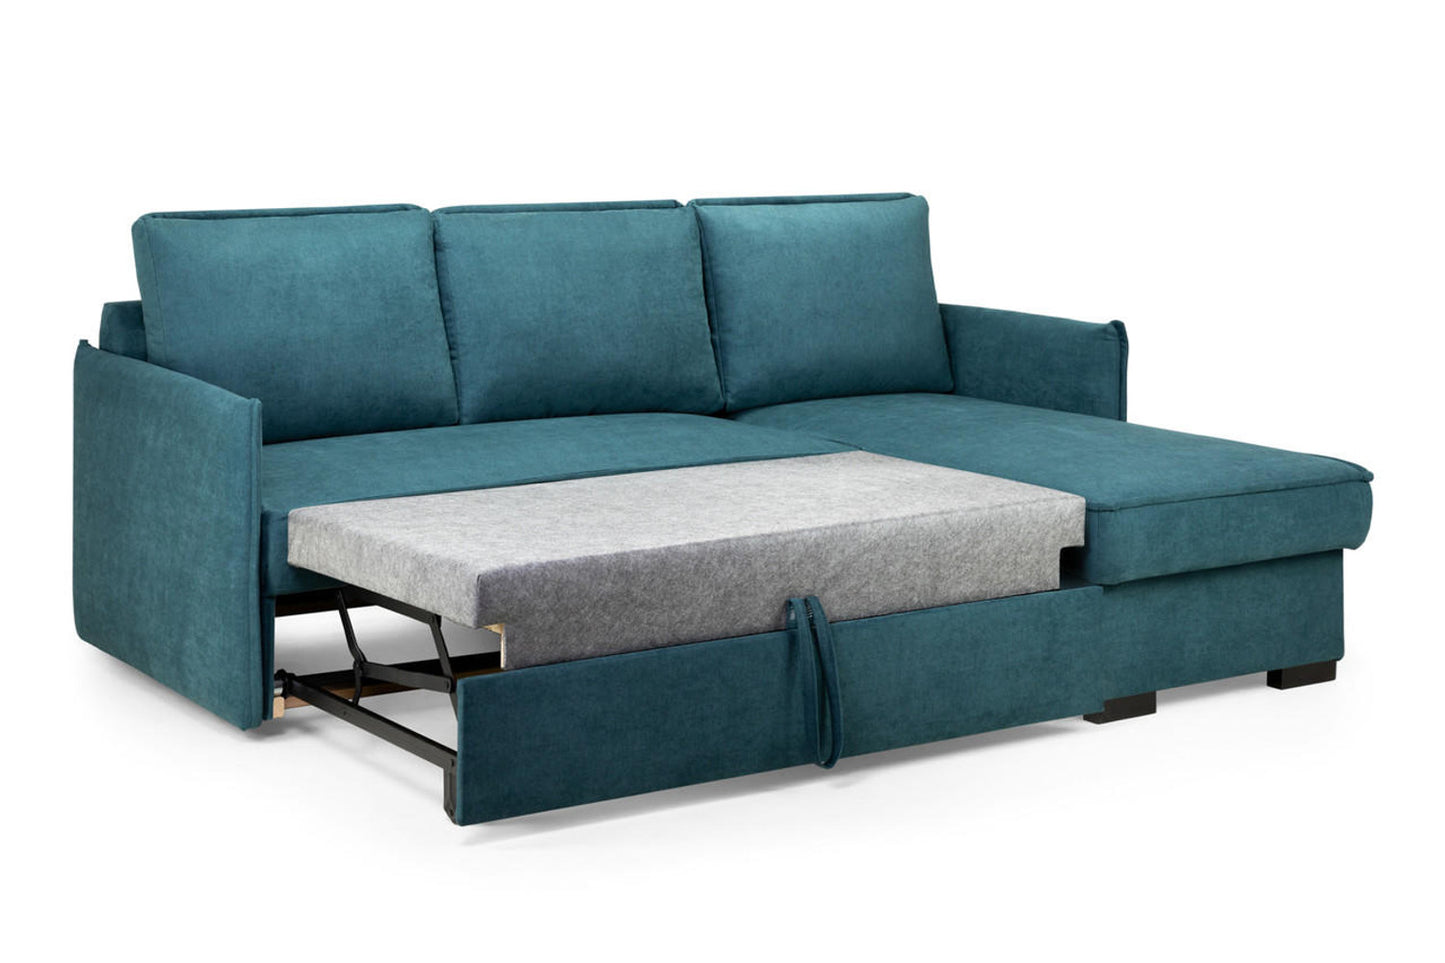 Miel Sofa Bed With Storage - Universal Corner - Teal